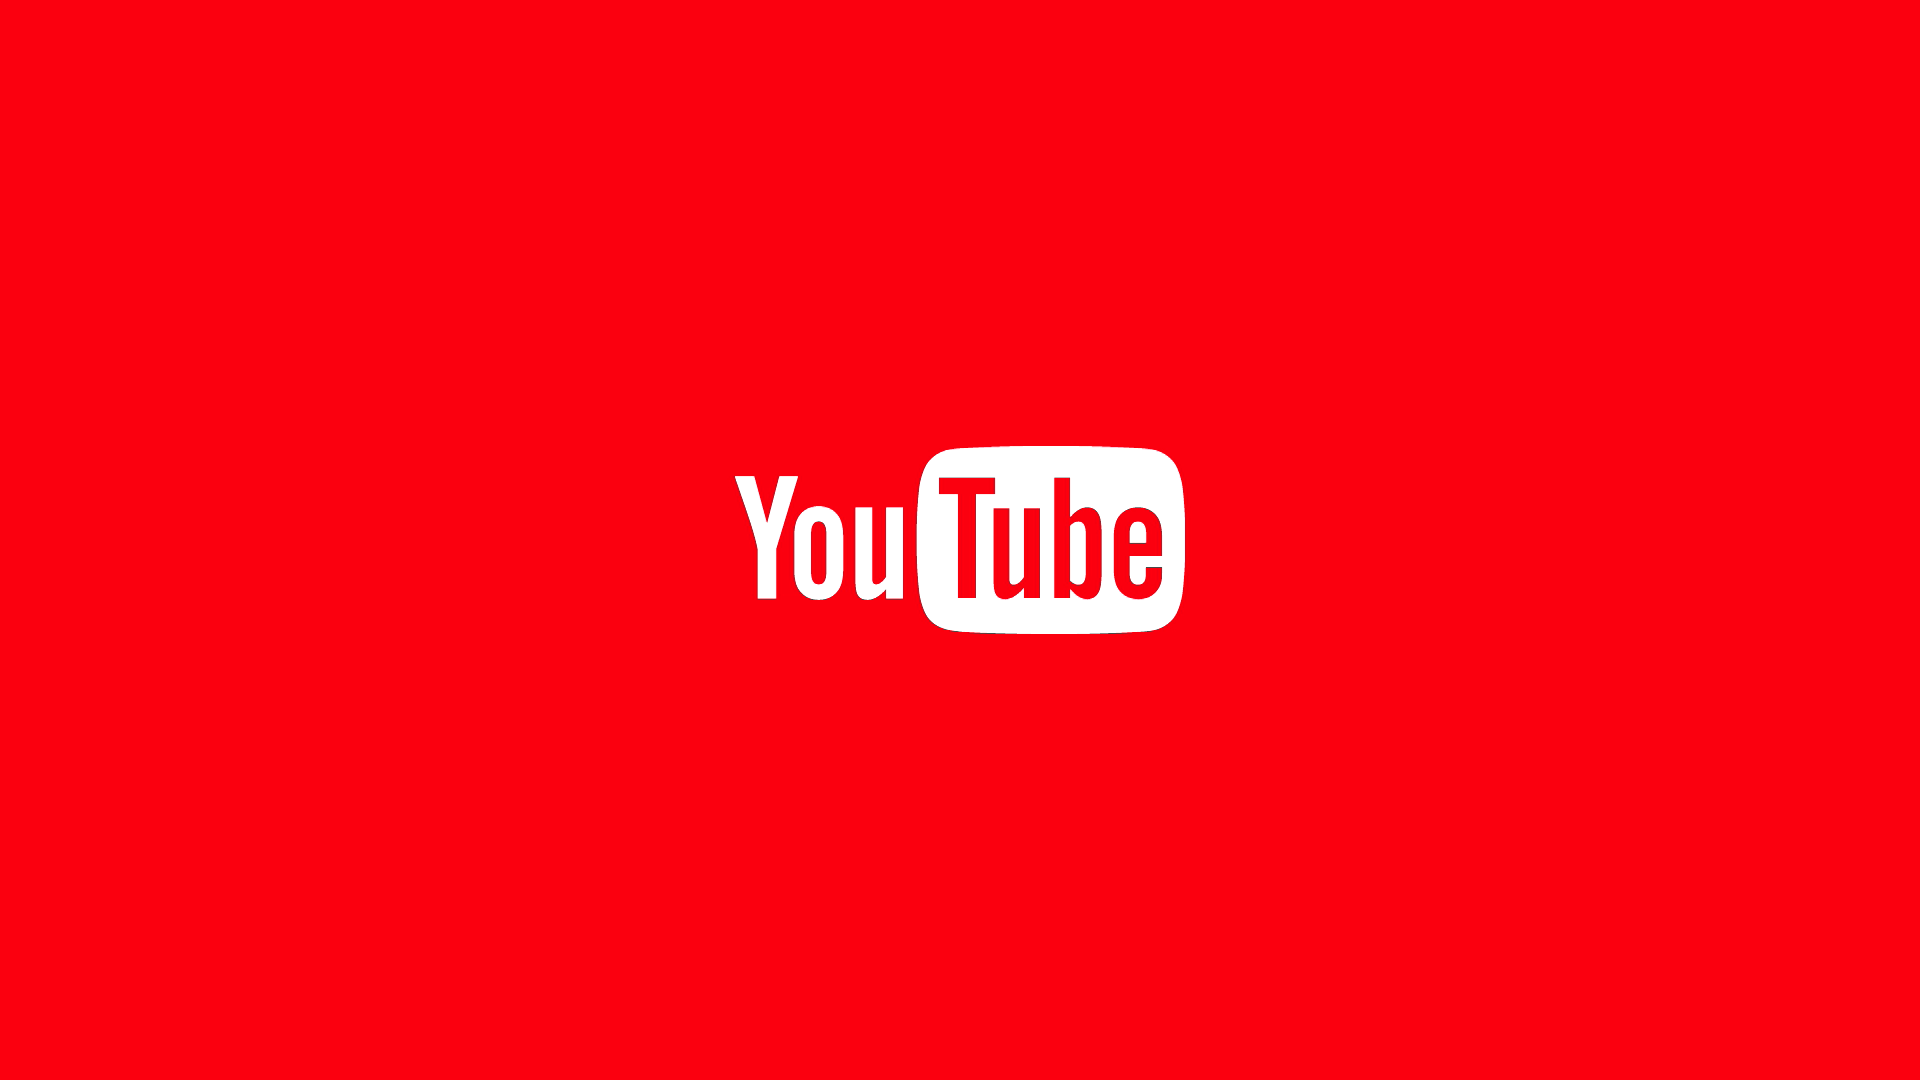 Yoube Logo - youtube logo hd wallpapers | ololoshenka | Youtube, Youtube logo, Videos